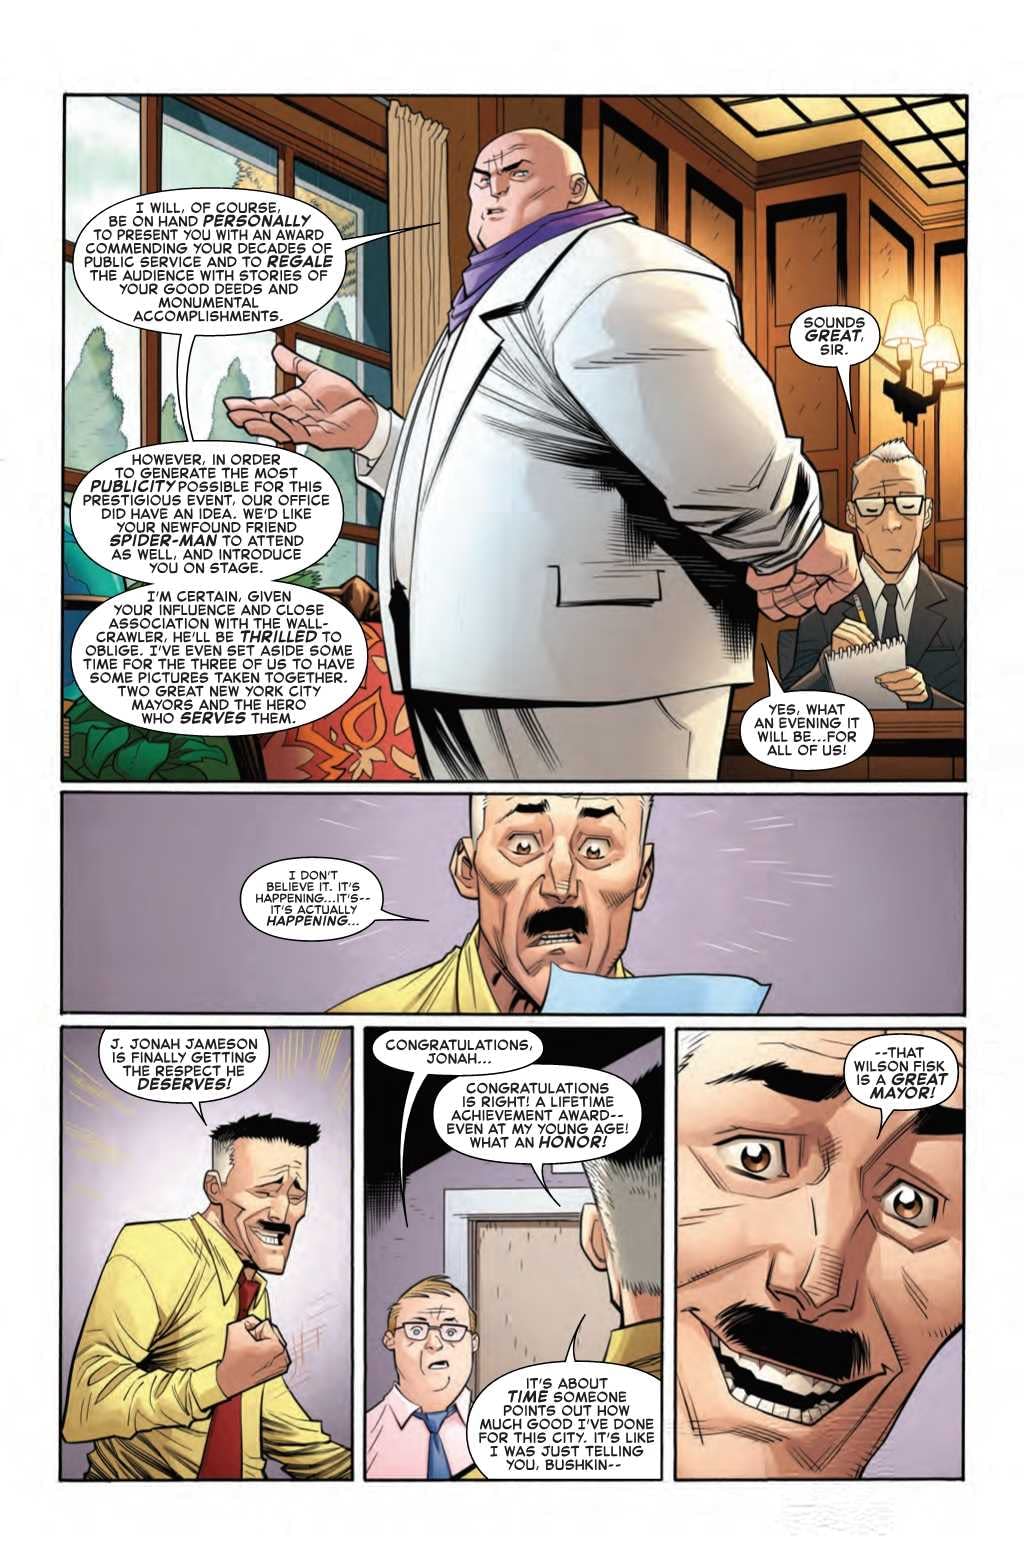 J. Jonah Jameson Gets a Surprising Invitation in Next Week's Amazing Spider-Man #11